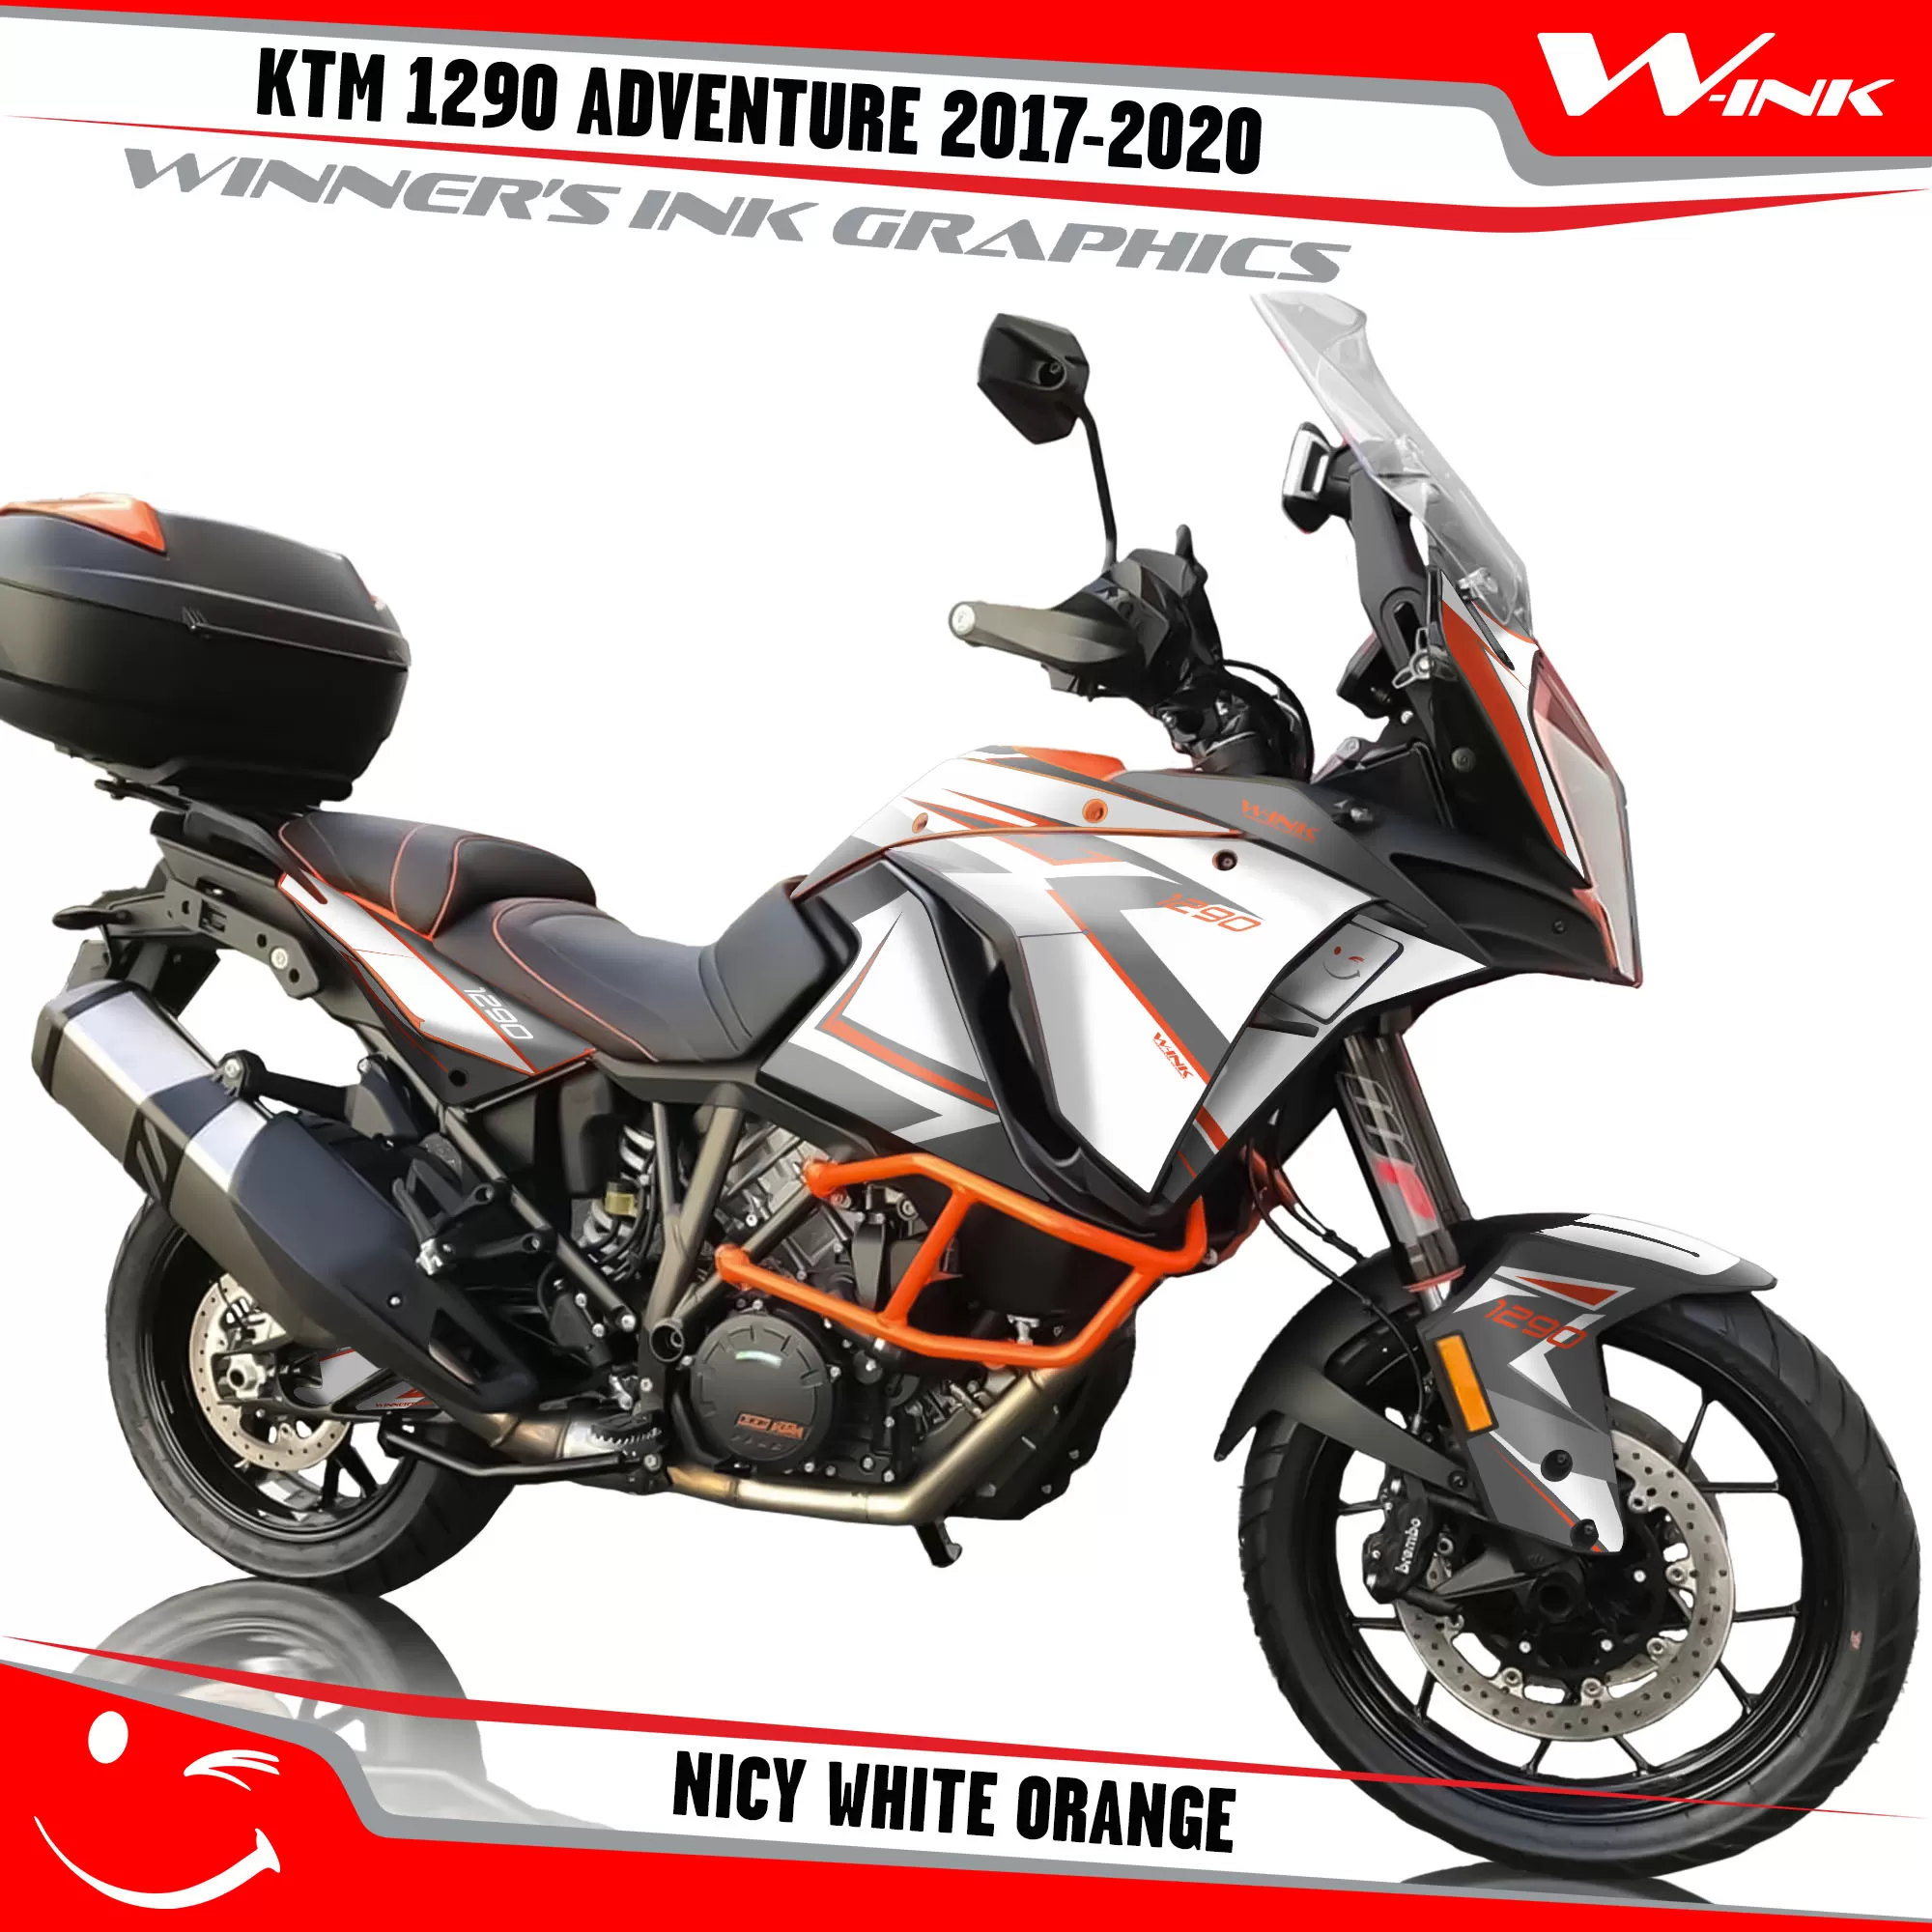 KTM-Adventure-1290-2017-2018-2019-2020-graphics-kit-and-decals-Nicy-White-Orange